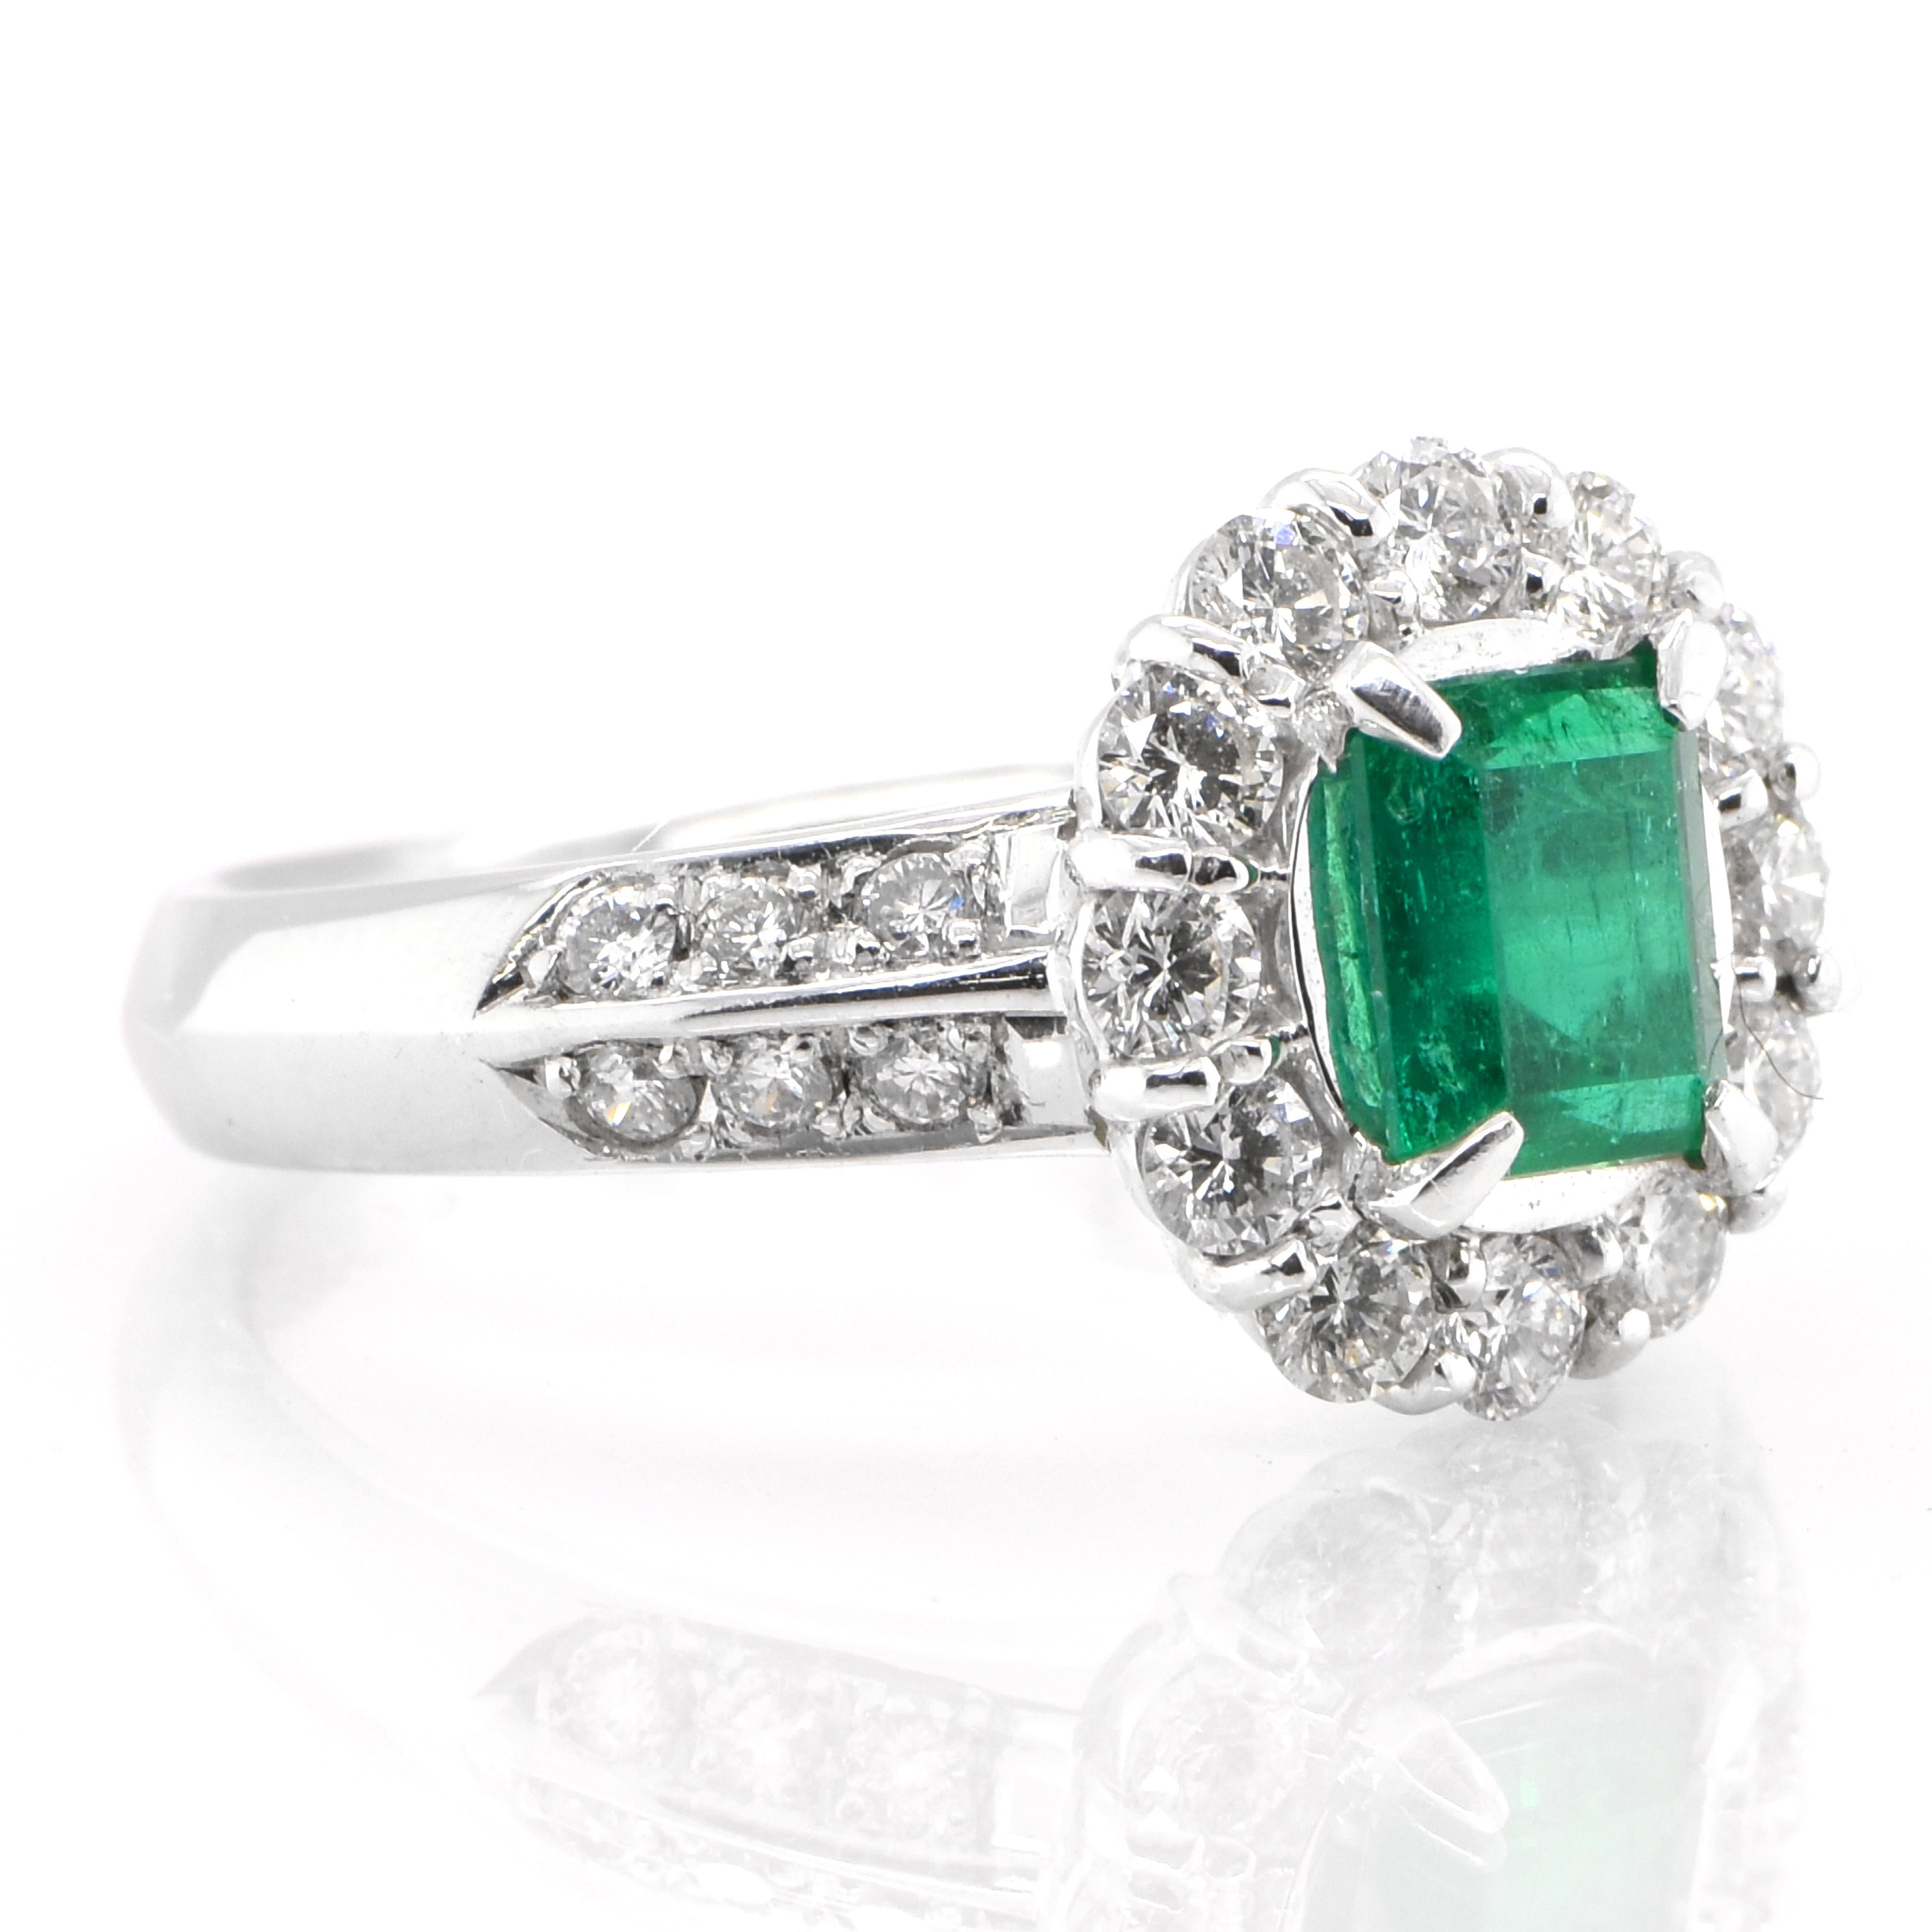 Modern 0.69 Carat Natural Emerald and Diamond Engagement Ring Set in Platinum